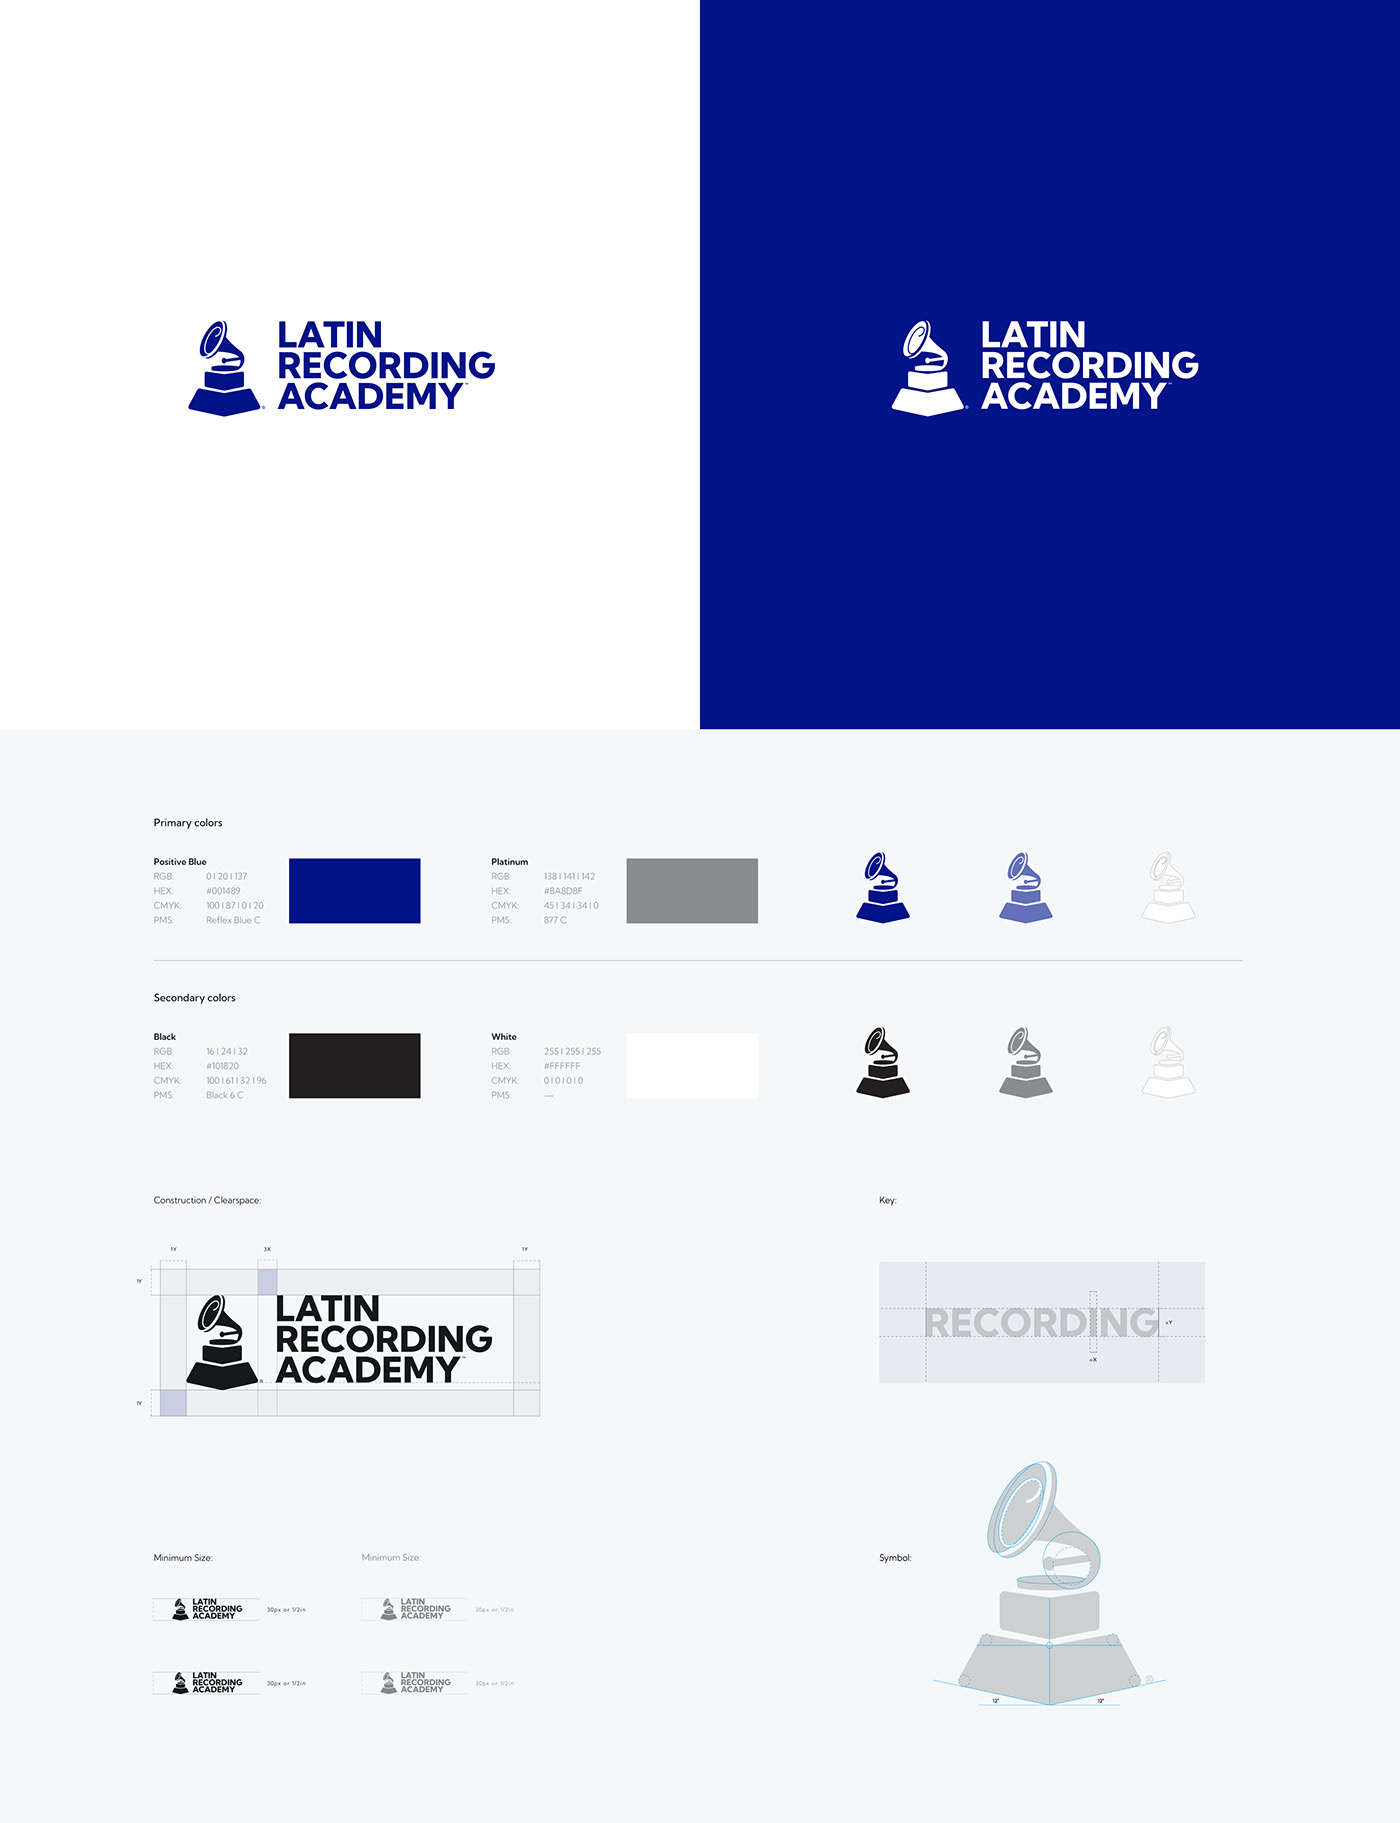 academy blue grammy gramophone Latin Grammy logo music sound award Entertainment